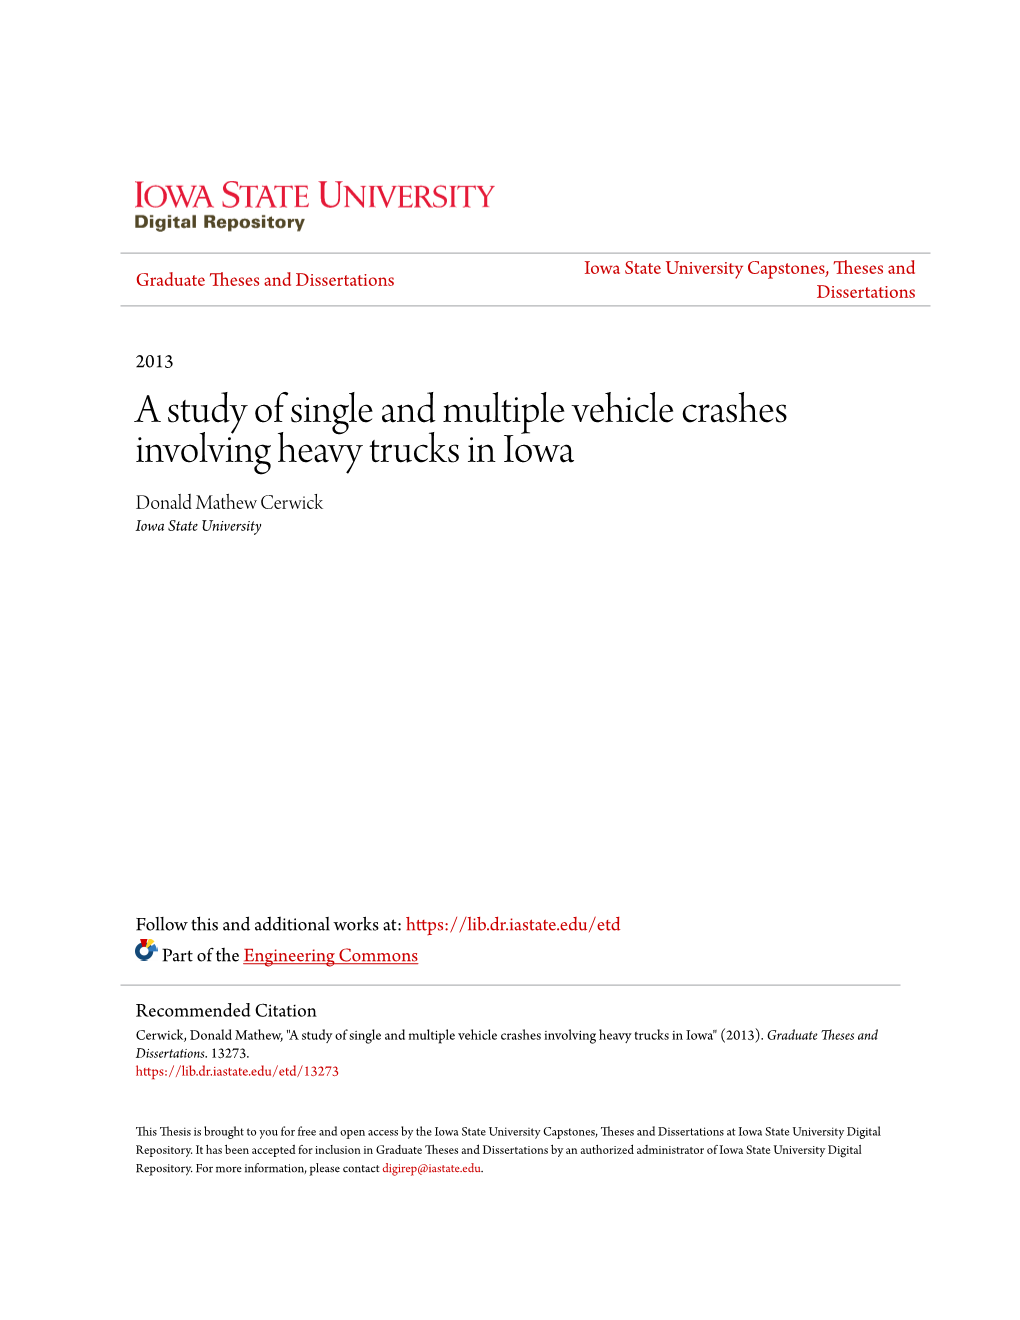 A Study of Single and Multiple Vehicle Crashes Involving Heavy Trucks in Iowa Donald Mathew Cerwick Iowa State University